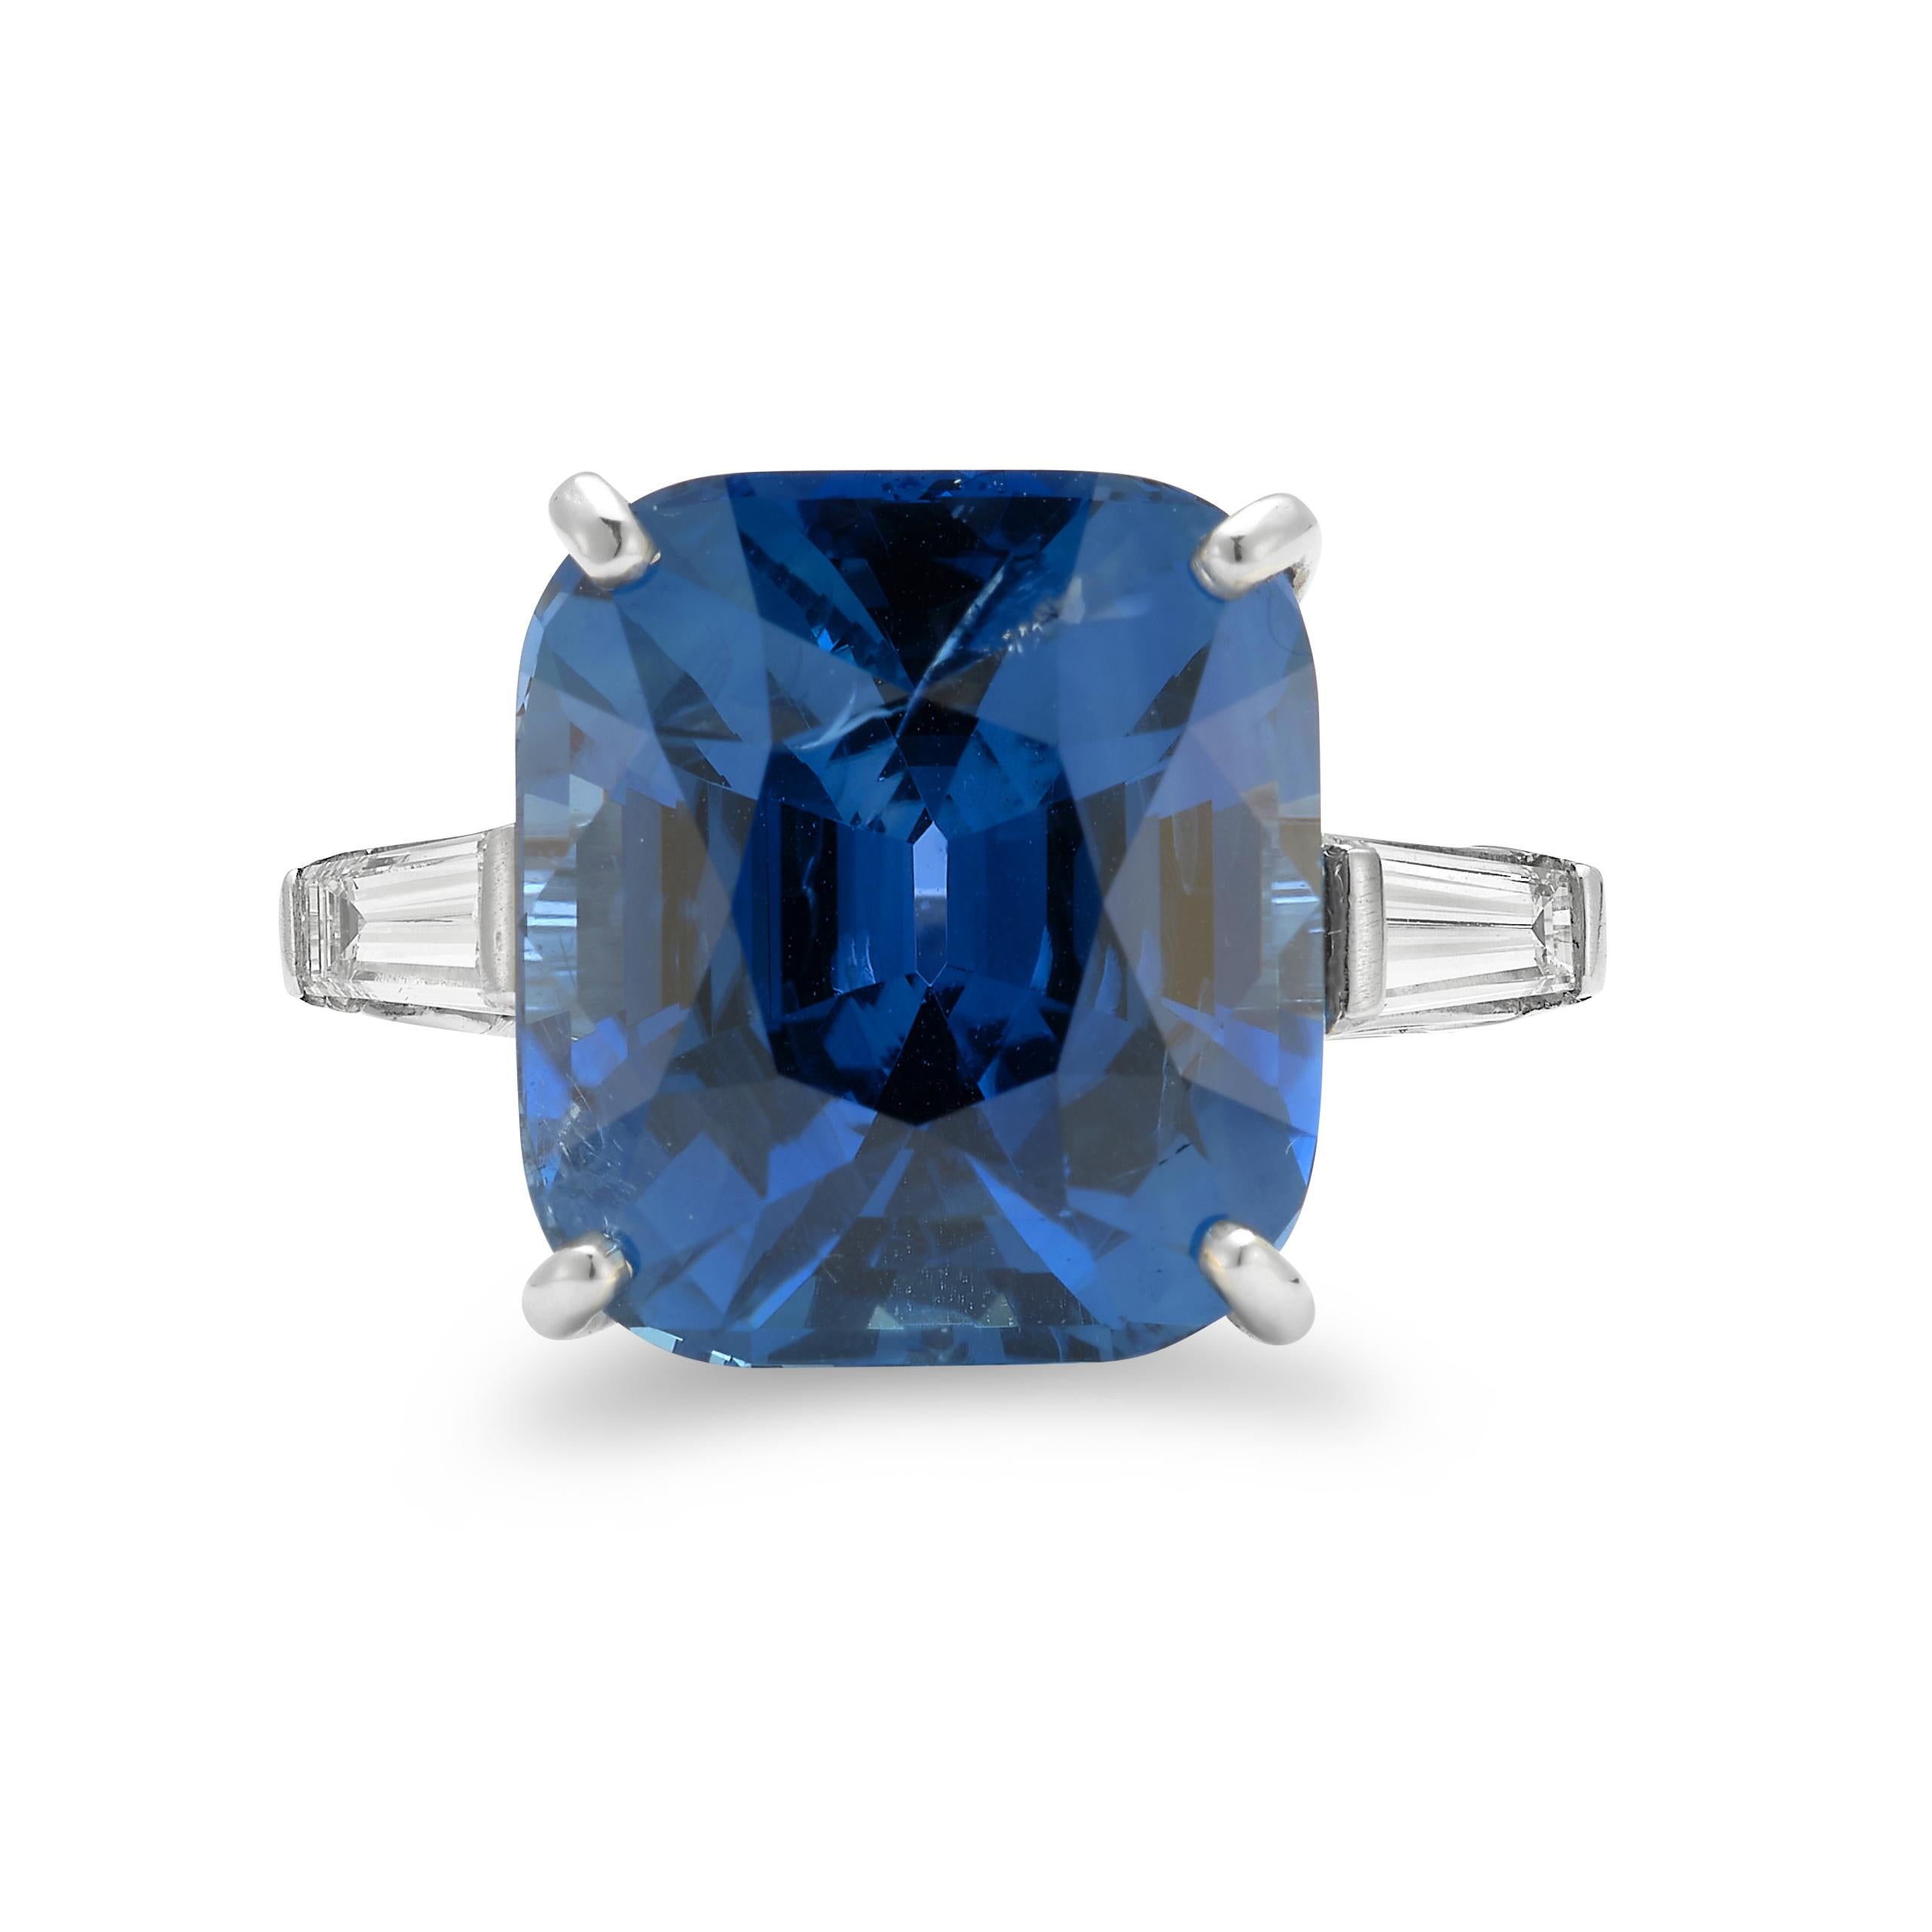 27.48 Carat Unheated Burmese Sapphire Ring by Oscar Heyman Brothers 5